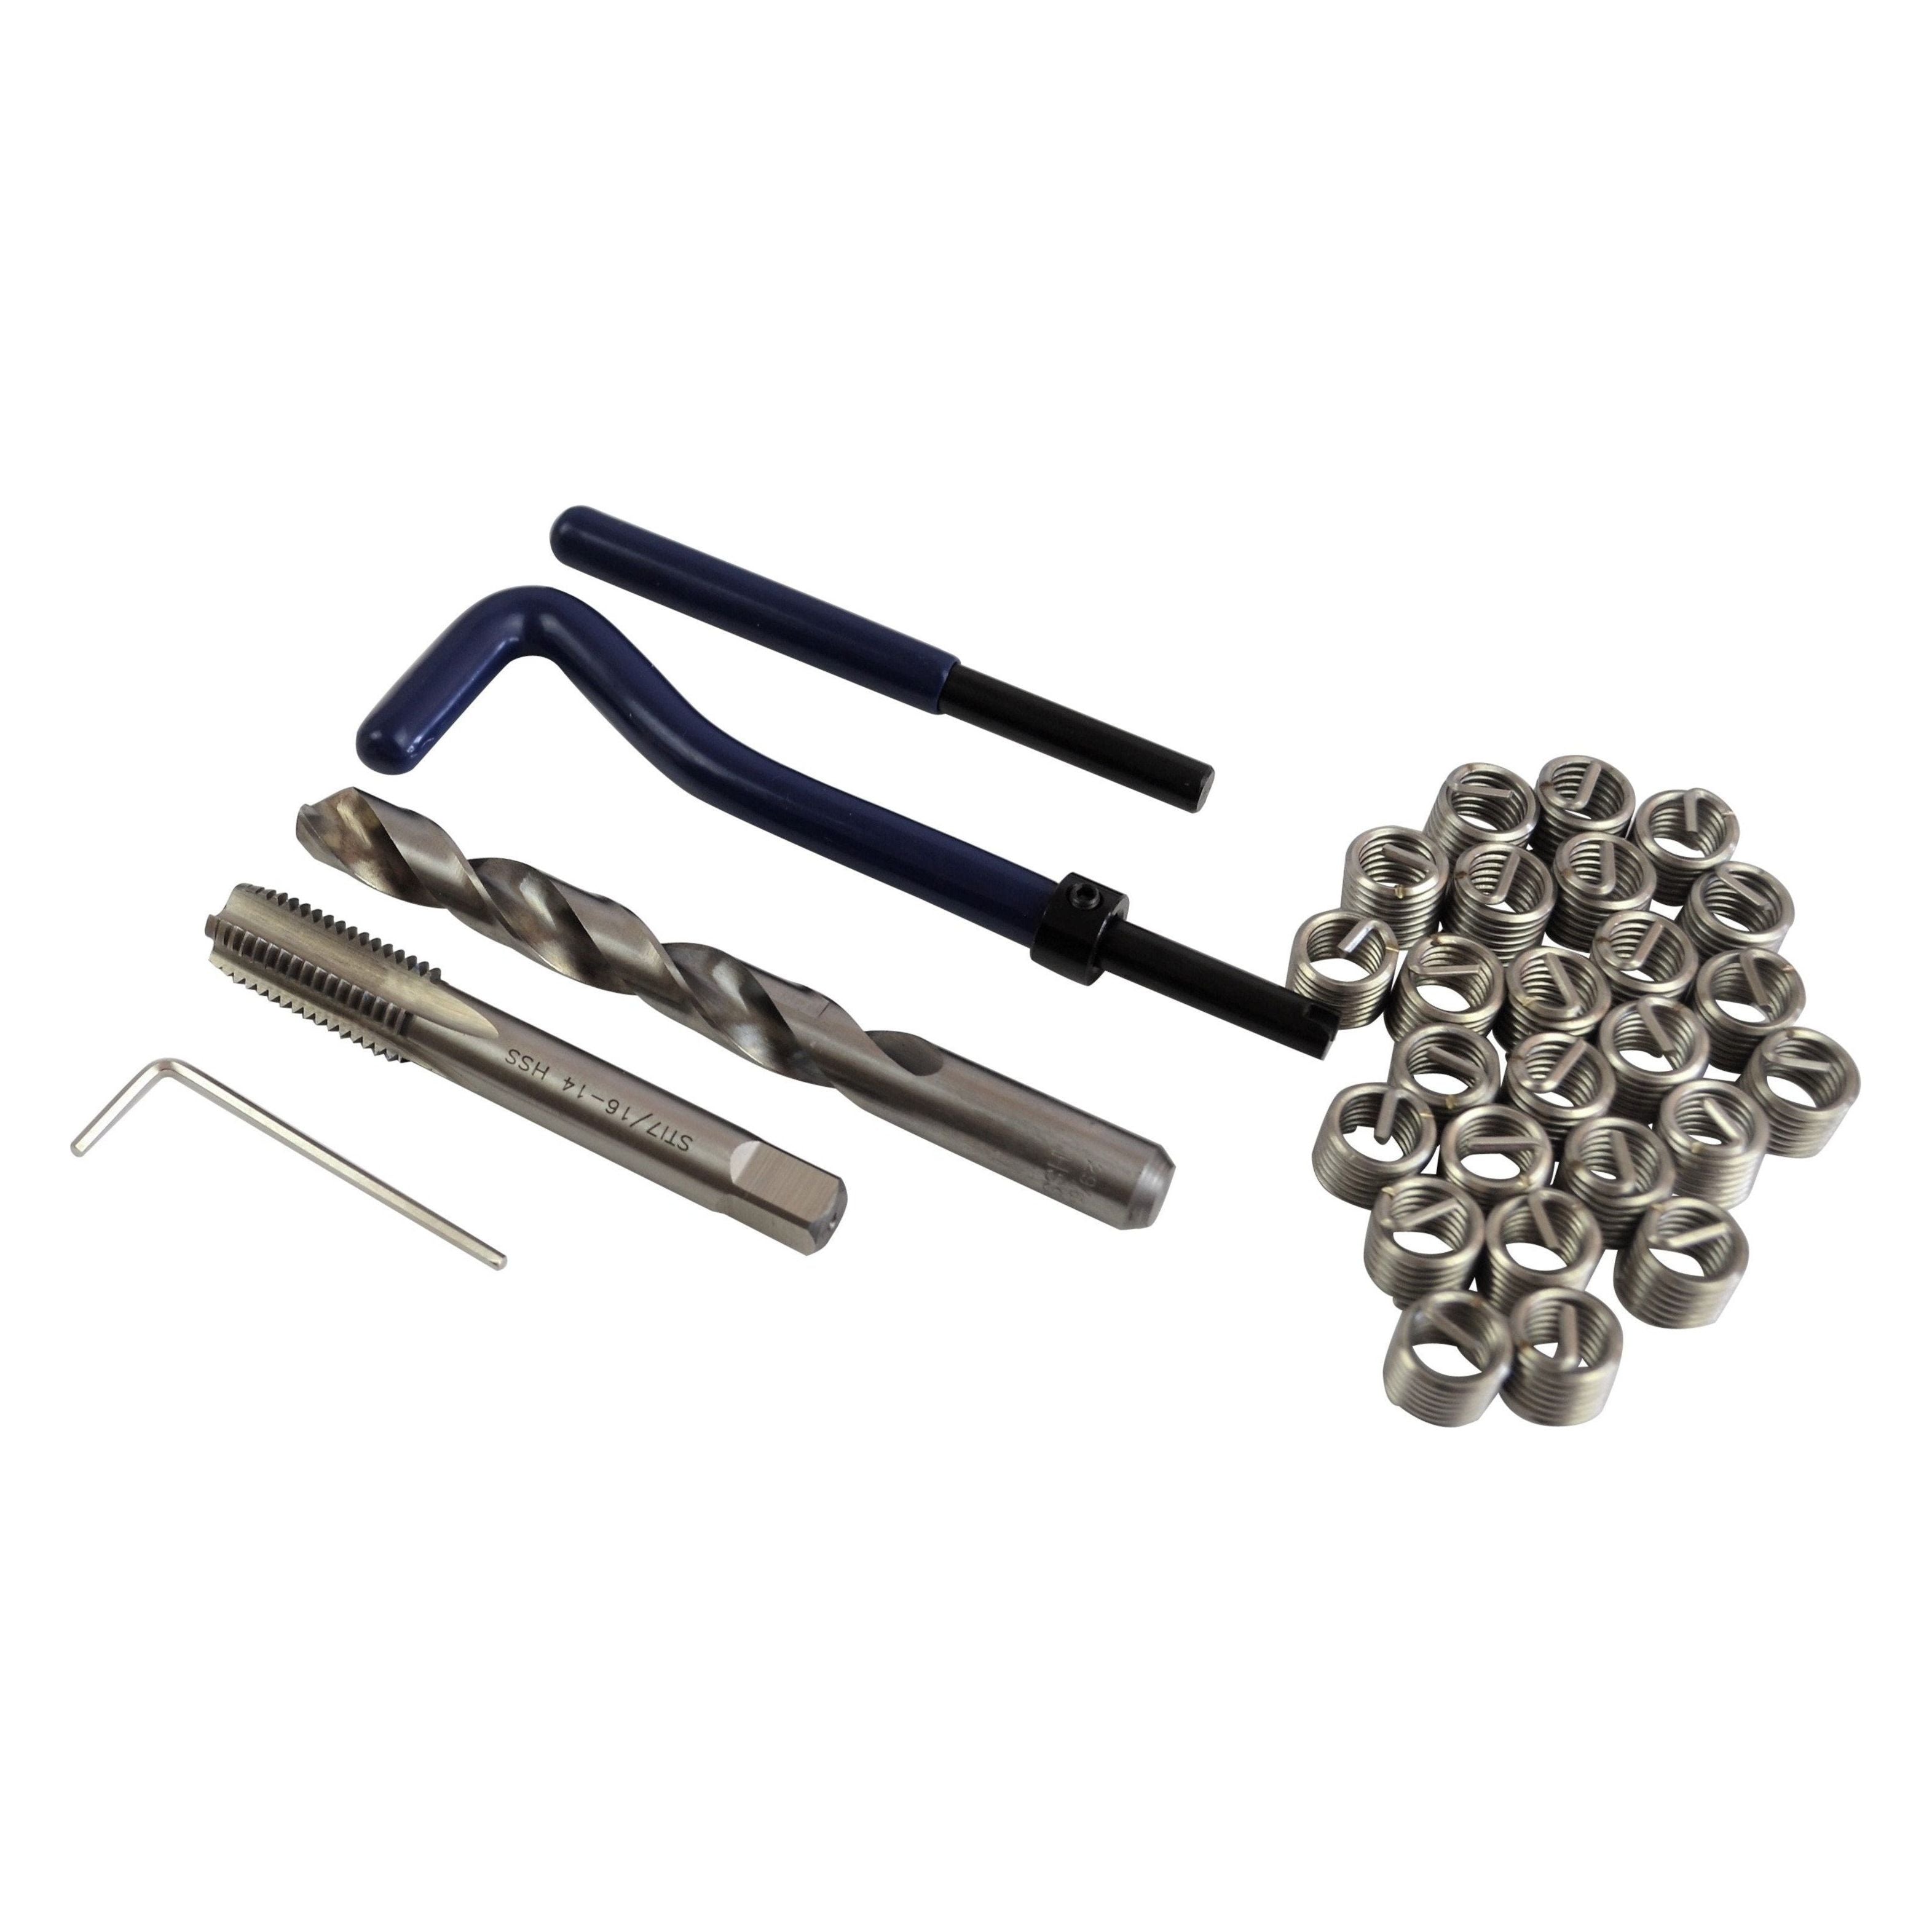 Helicoil Kit 7/16 - 14 thread repair insert tap set